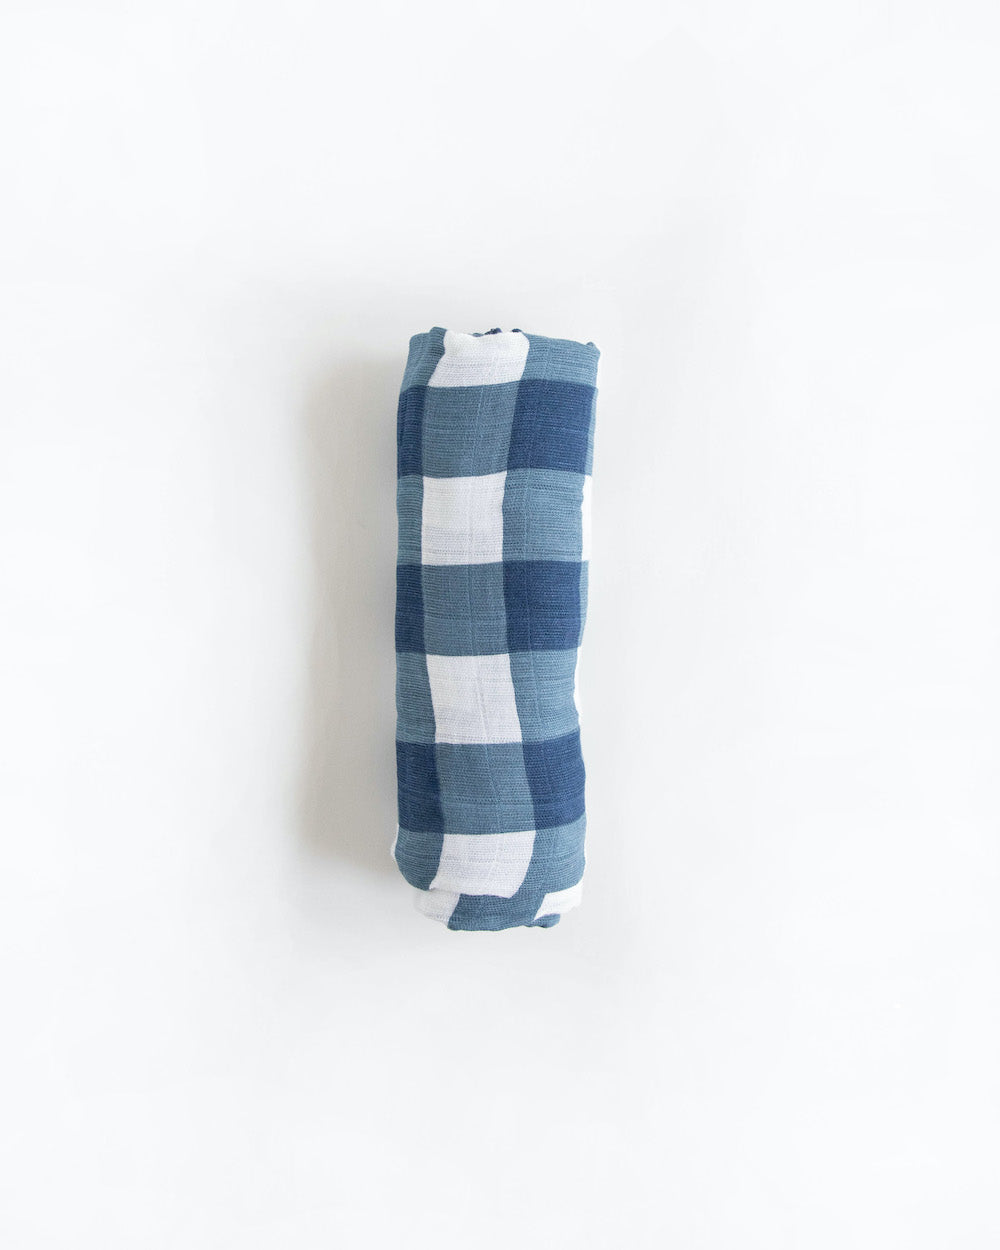 Cotton Muslin Swaddle Blanket - Jack Plaid